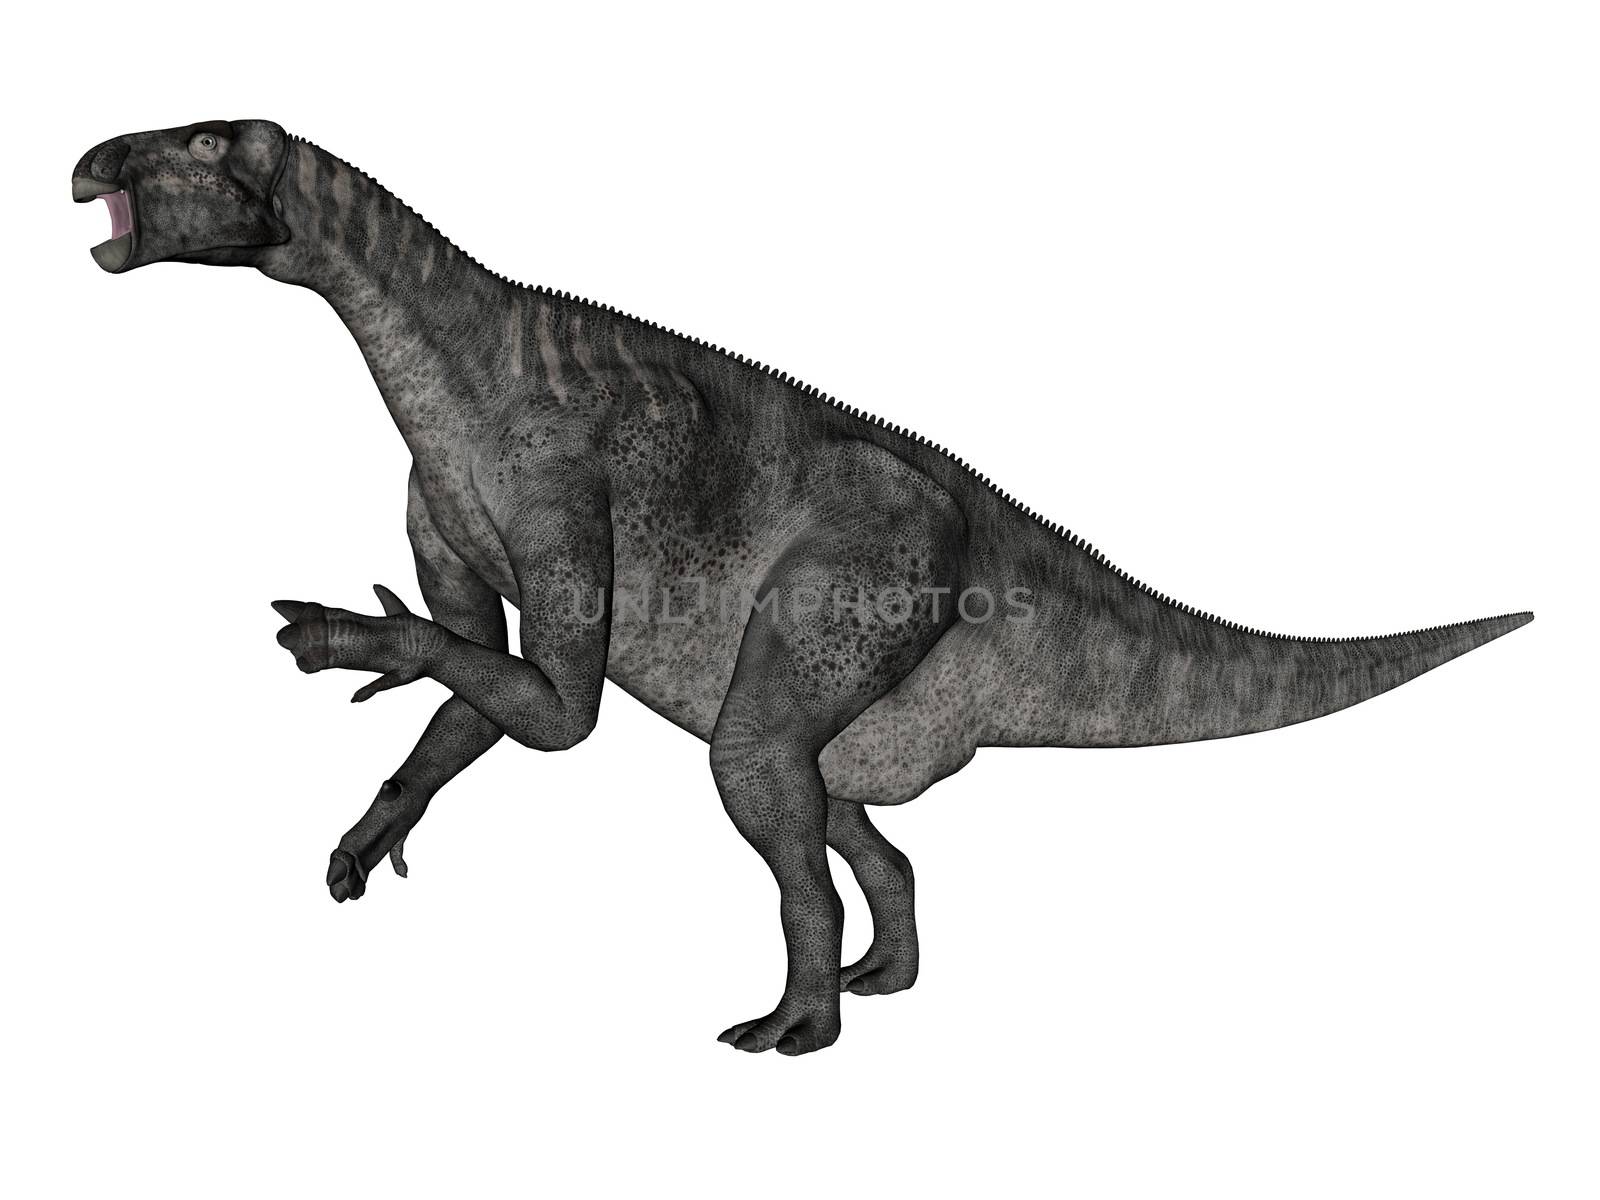 Iguanodon dinosaur roaring while walking - 3D render by Elenaphotos21